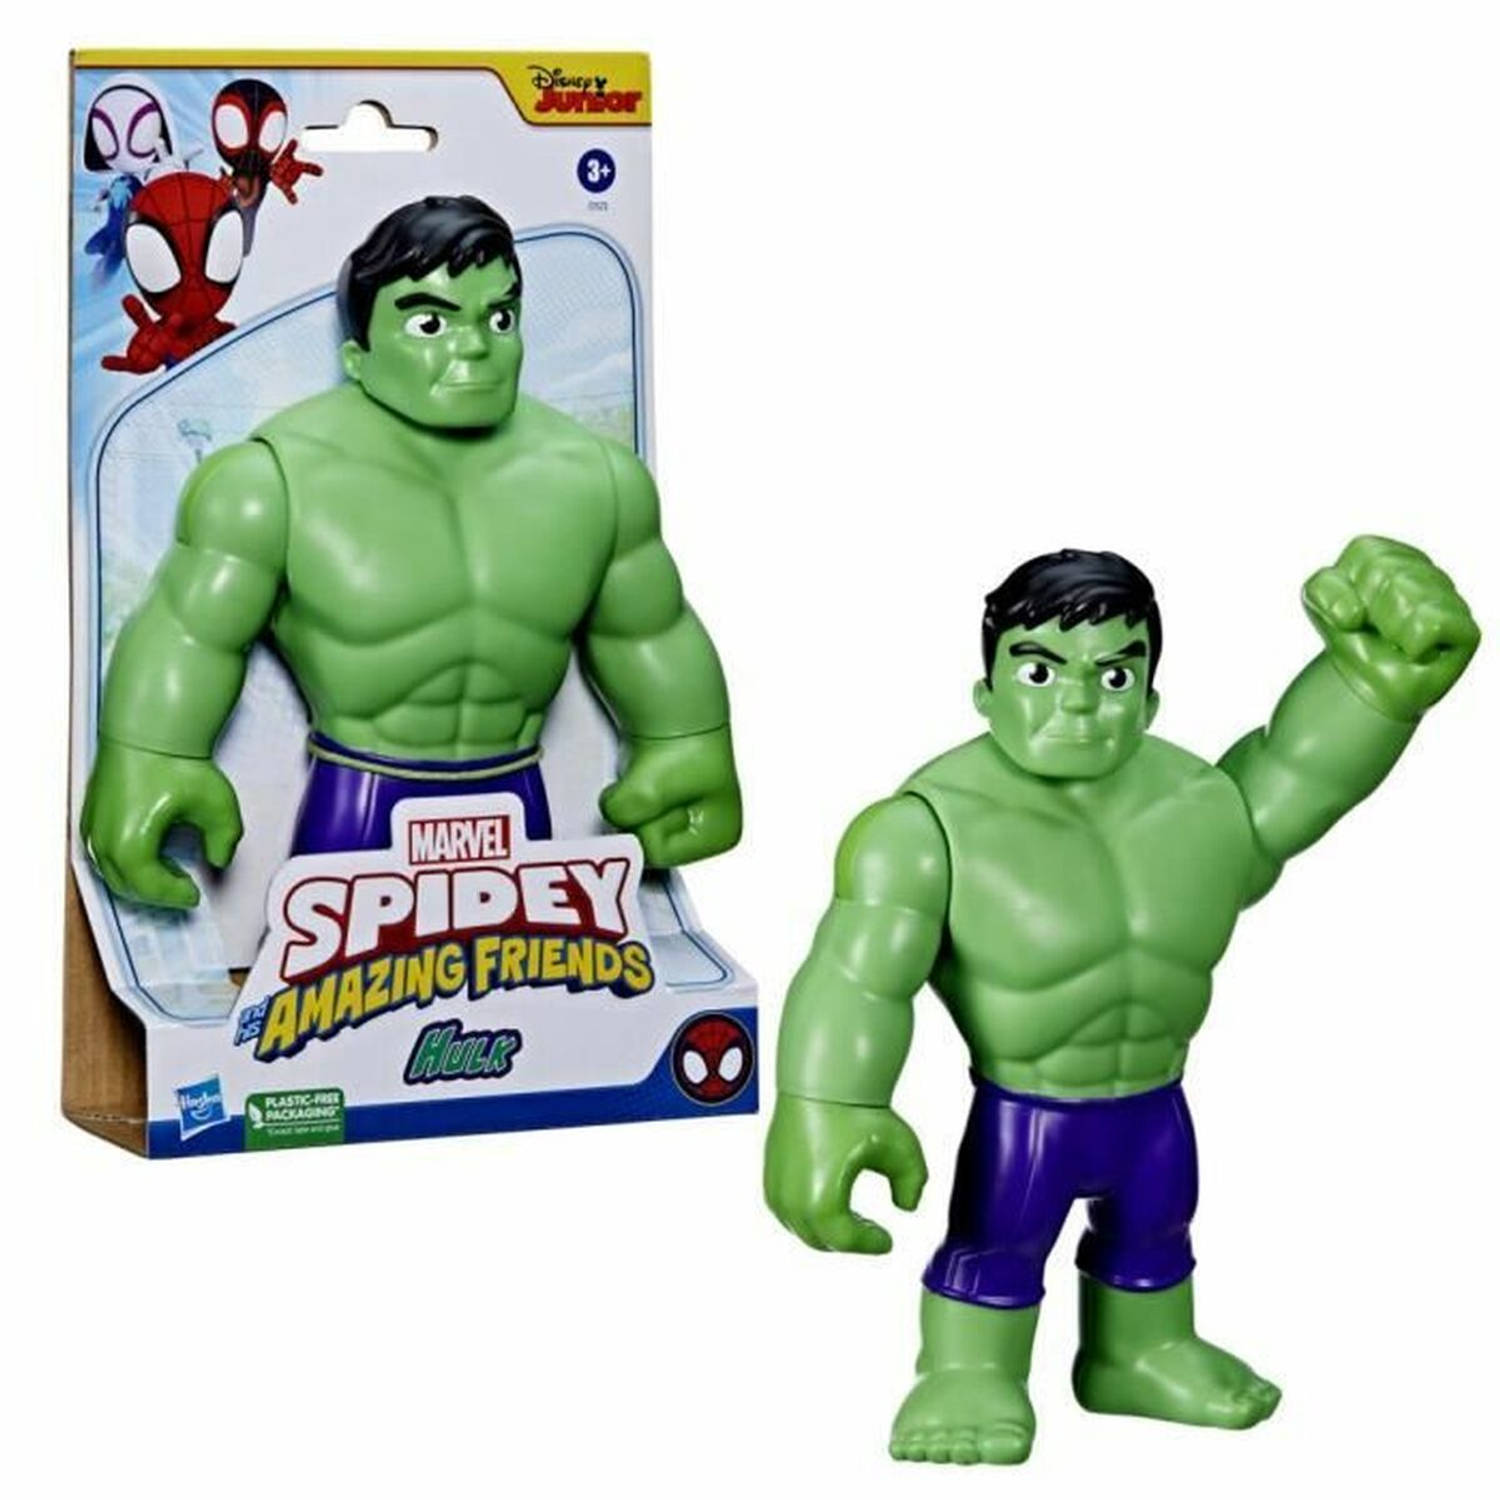 Actiefiguren Hasbro Hulk